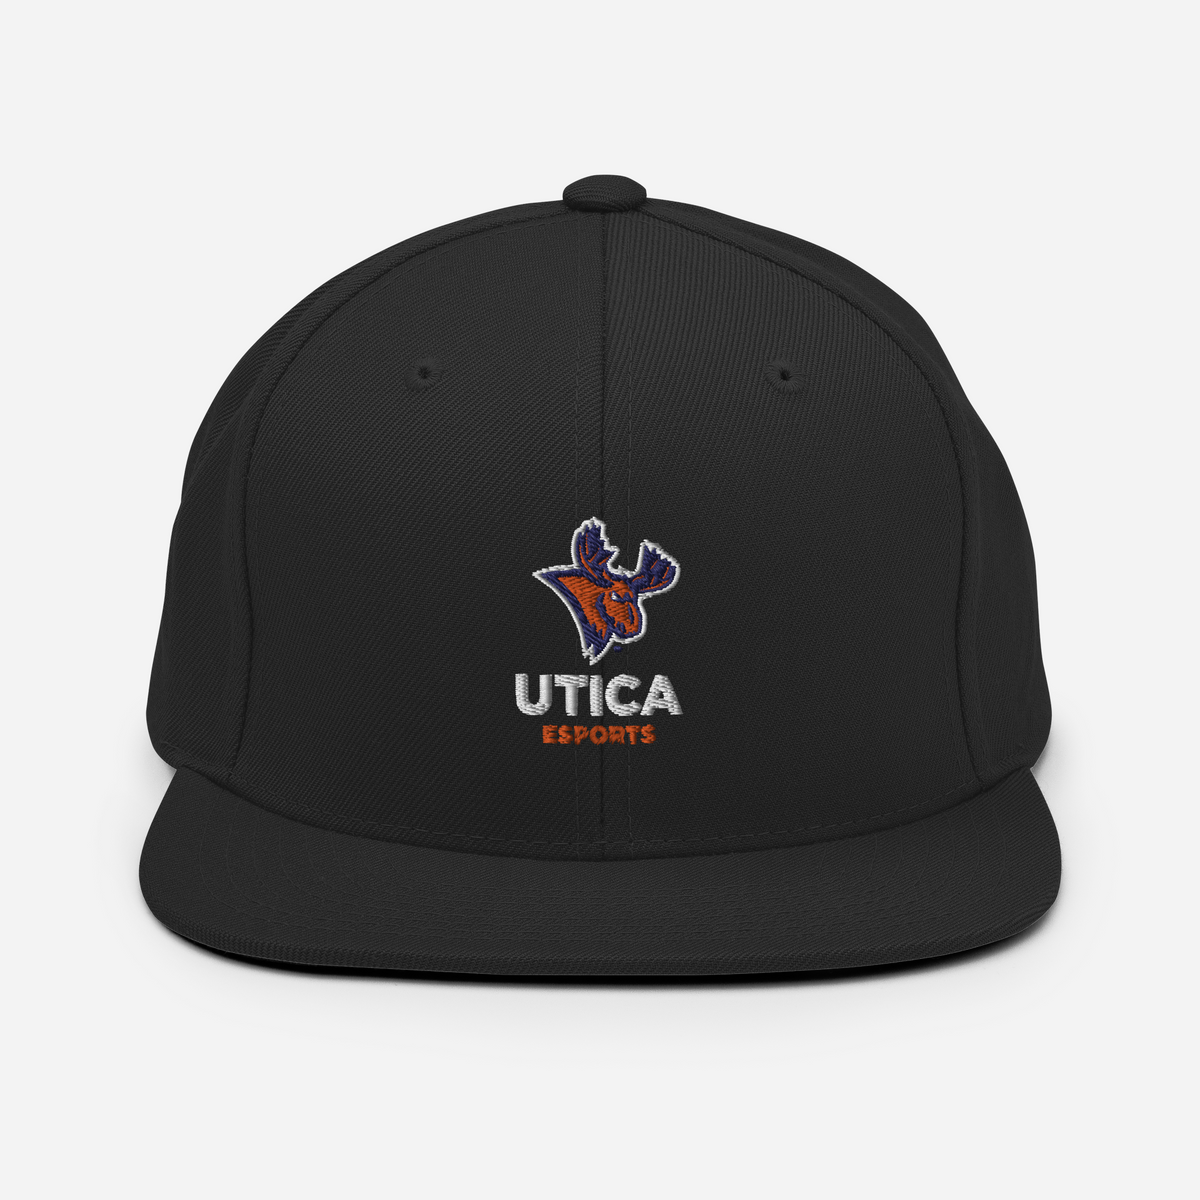 Utica University | On Demand | Embroidered Snapback Hat